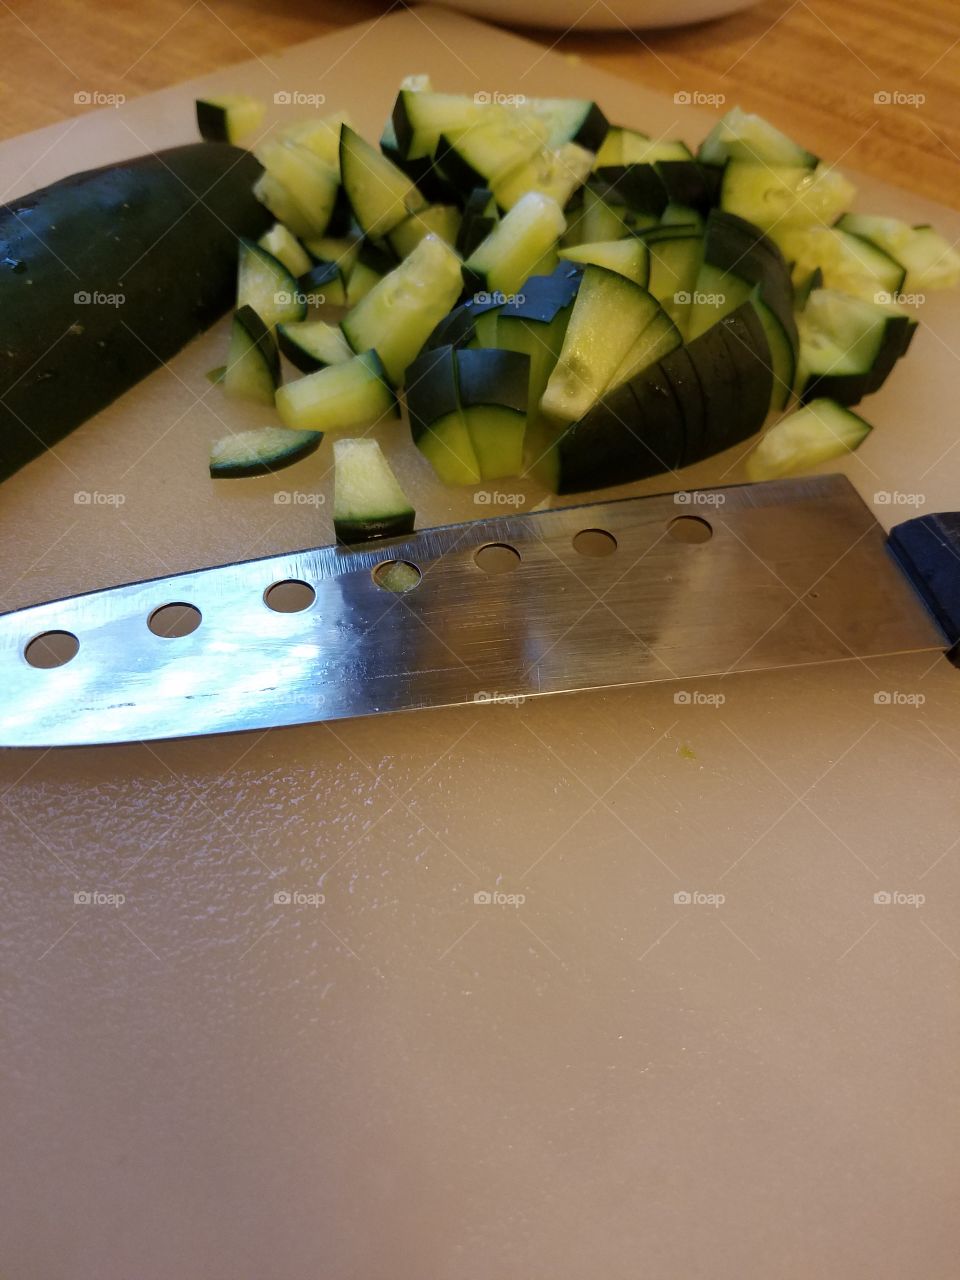 chopping cucumber